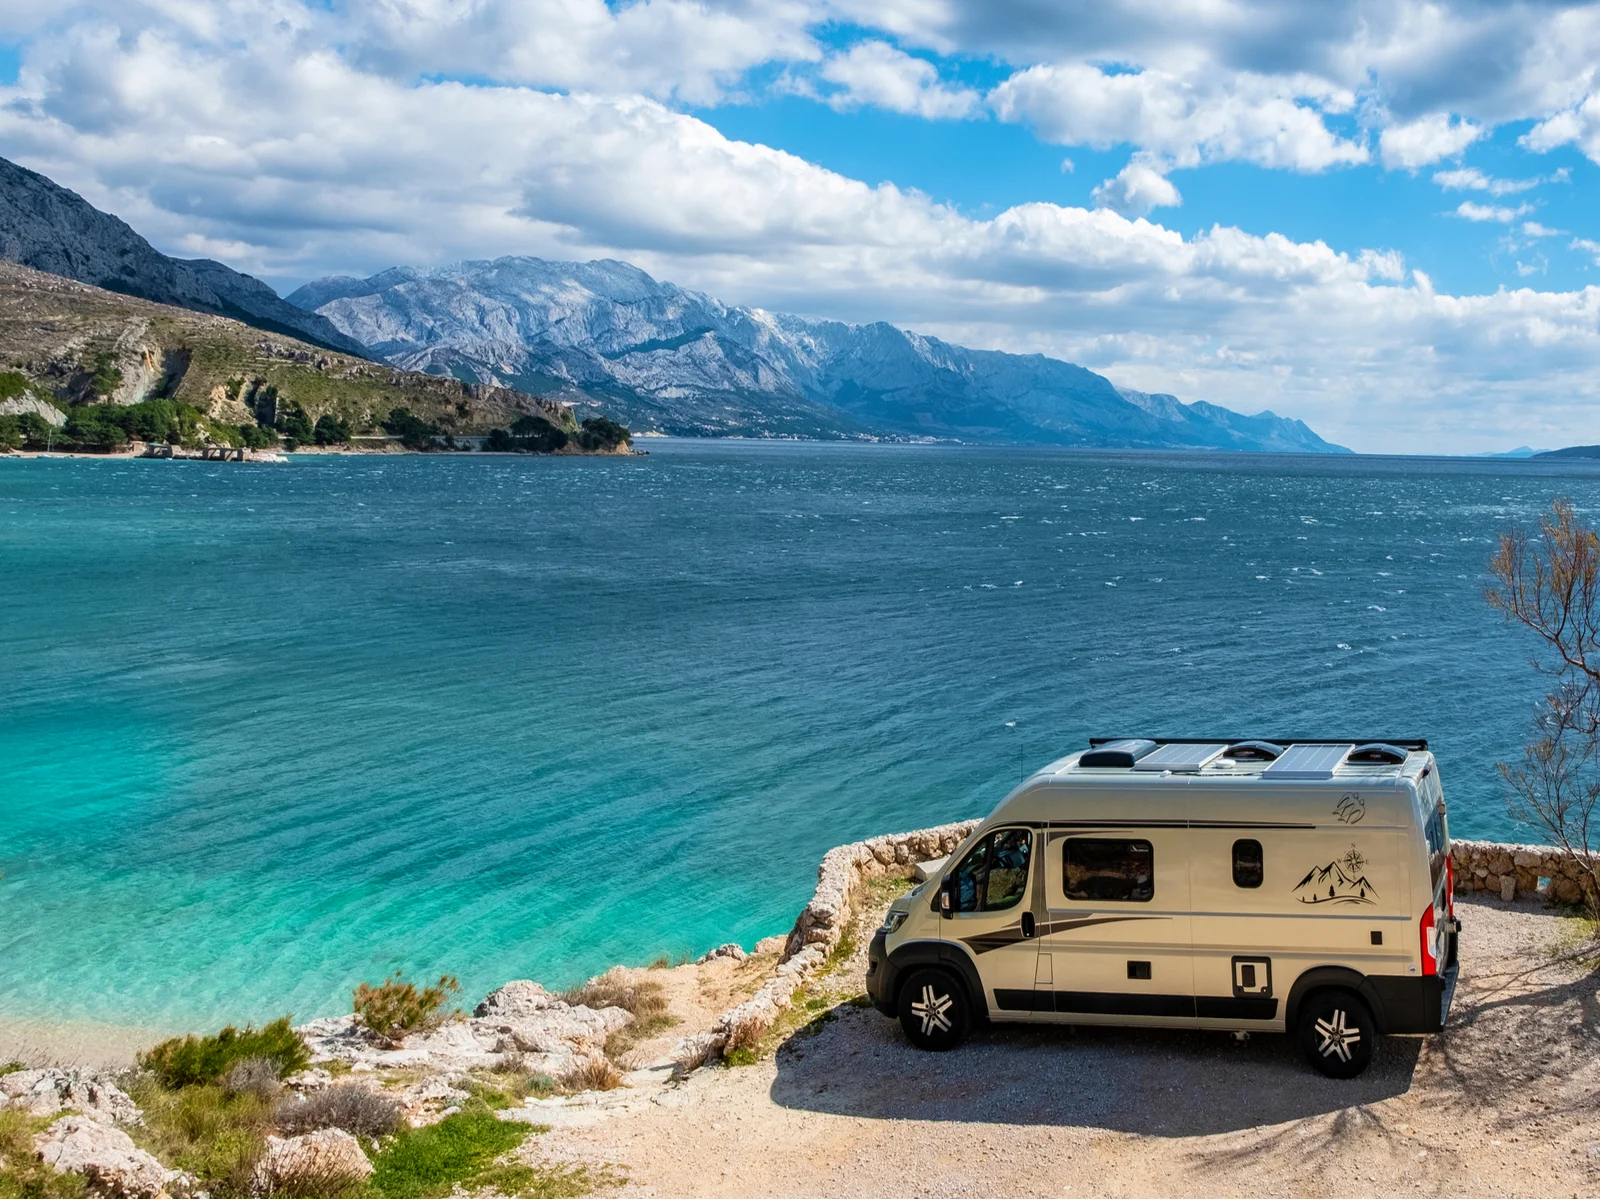 Camper van overlooking the Adriatic Sea, one of the best things to do in Croatia